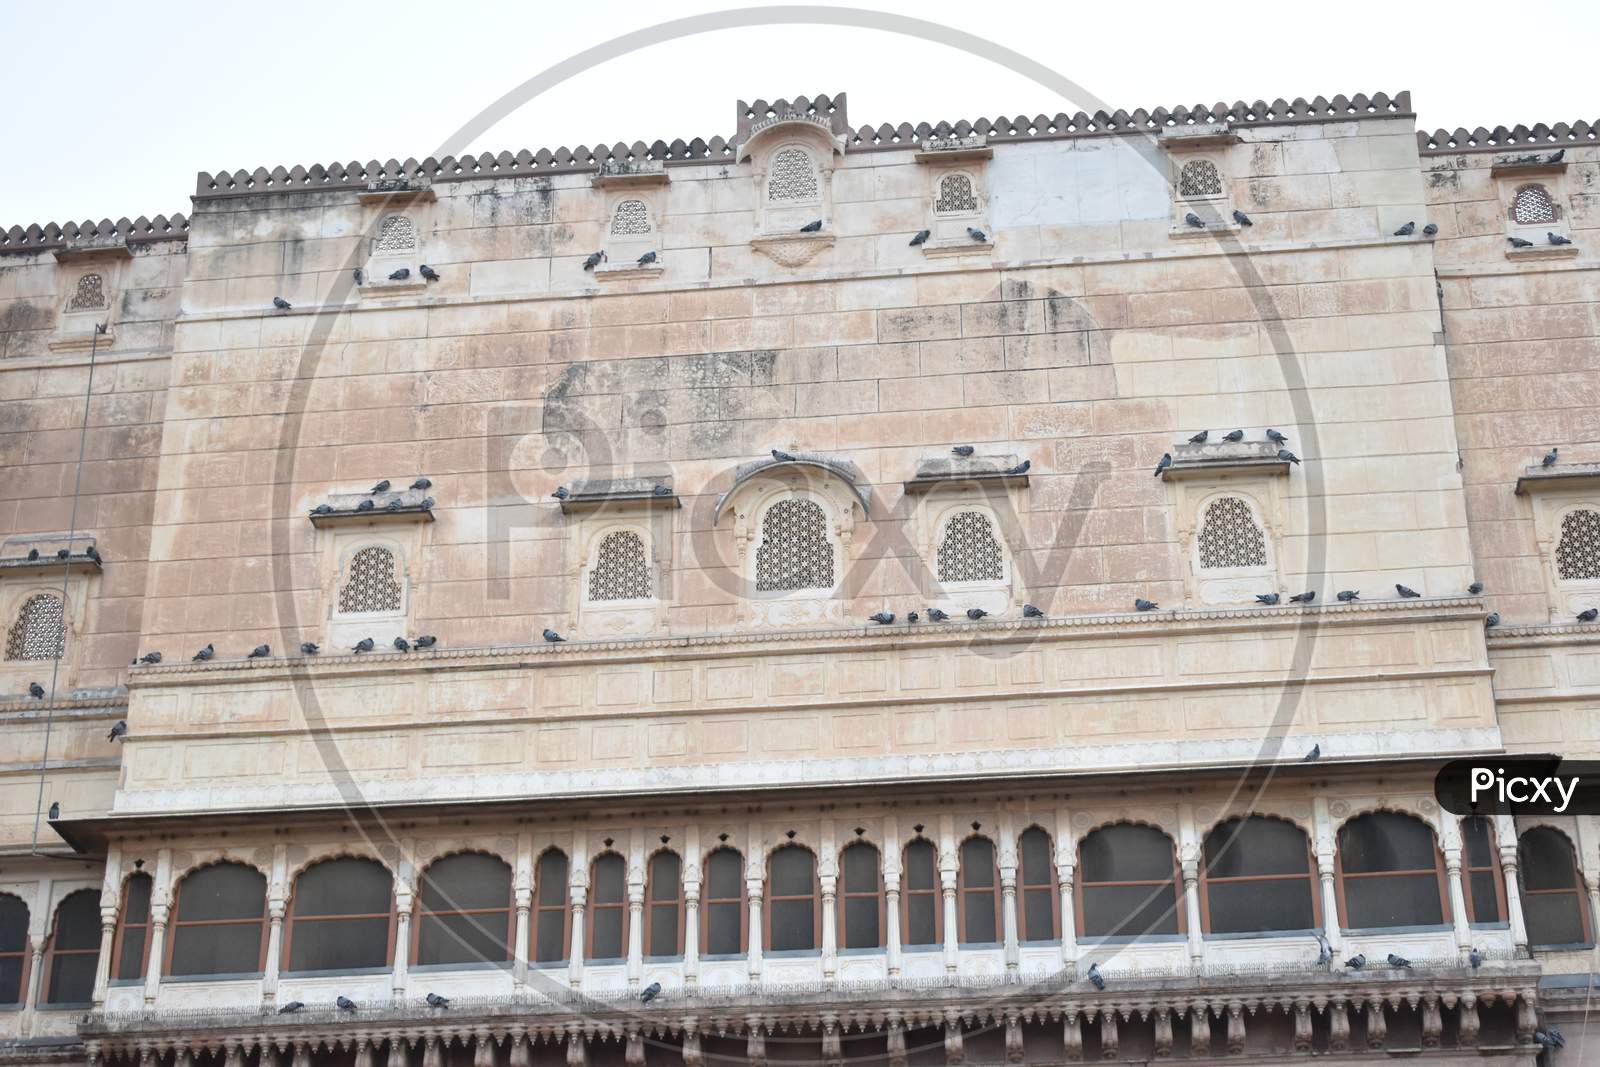 Facade of Junagarth fort. Bikaner, Rajasthan, India.